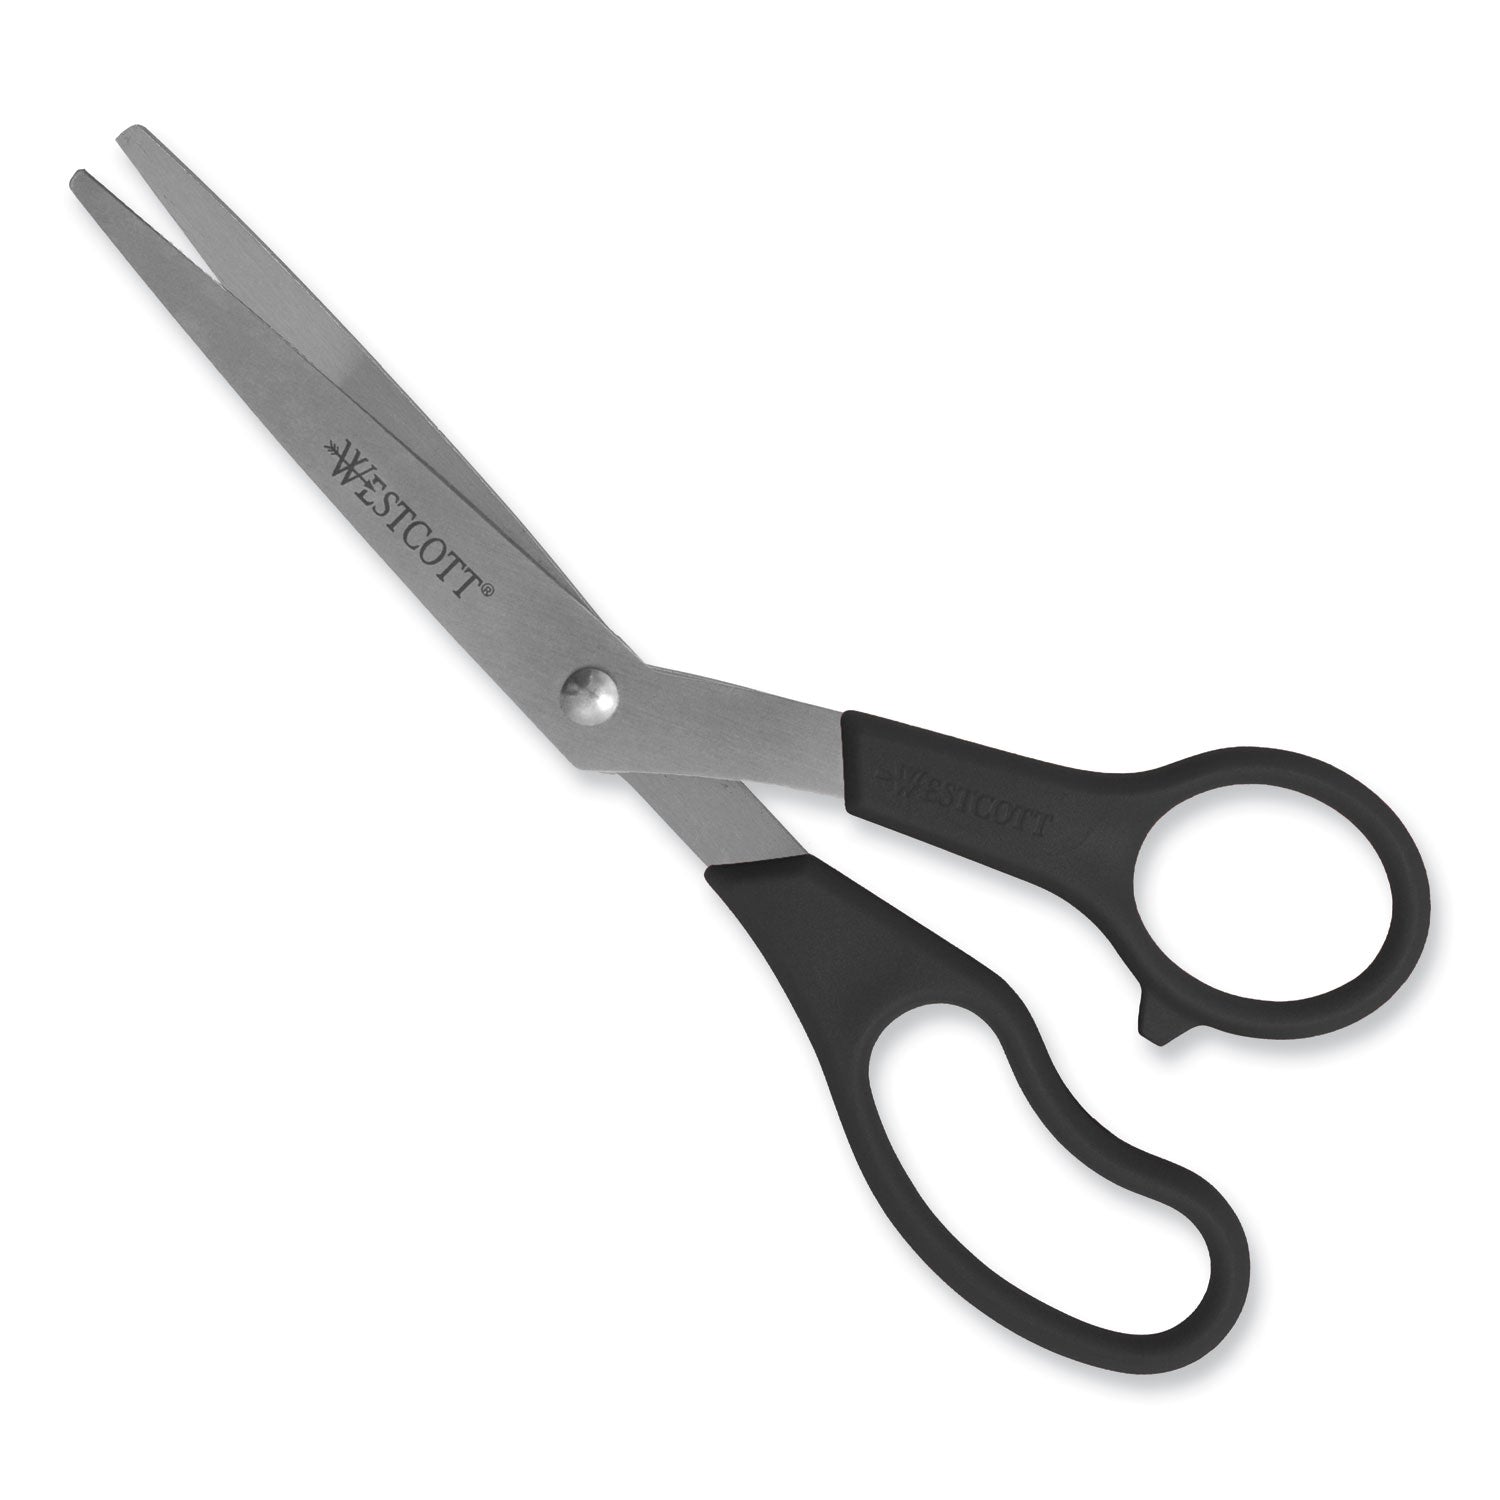 Value Line Stainless Steel Shears, 8" Long, 3.5" Cut Length, Black Offset Handles, 3/Pack - 